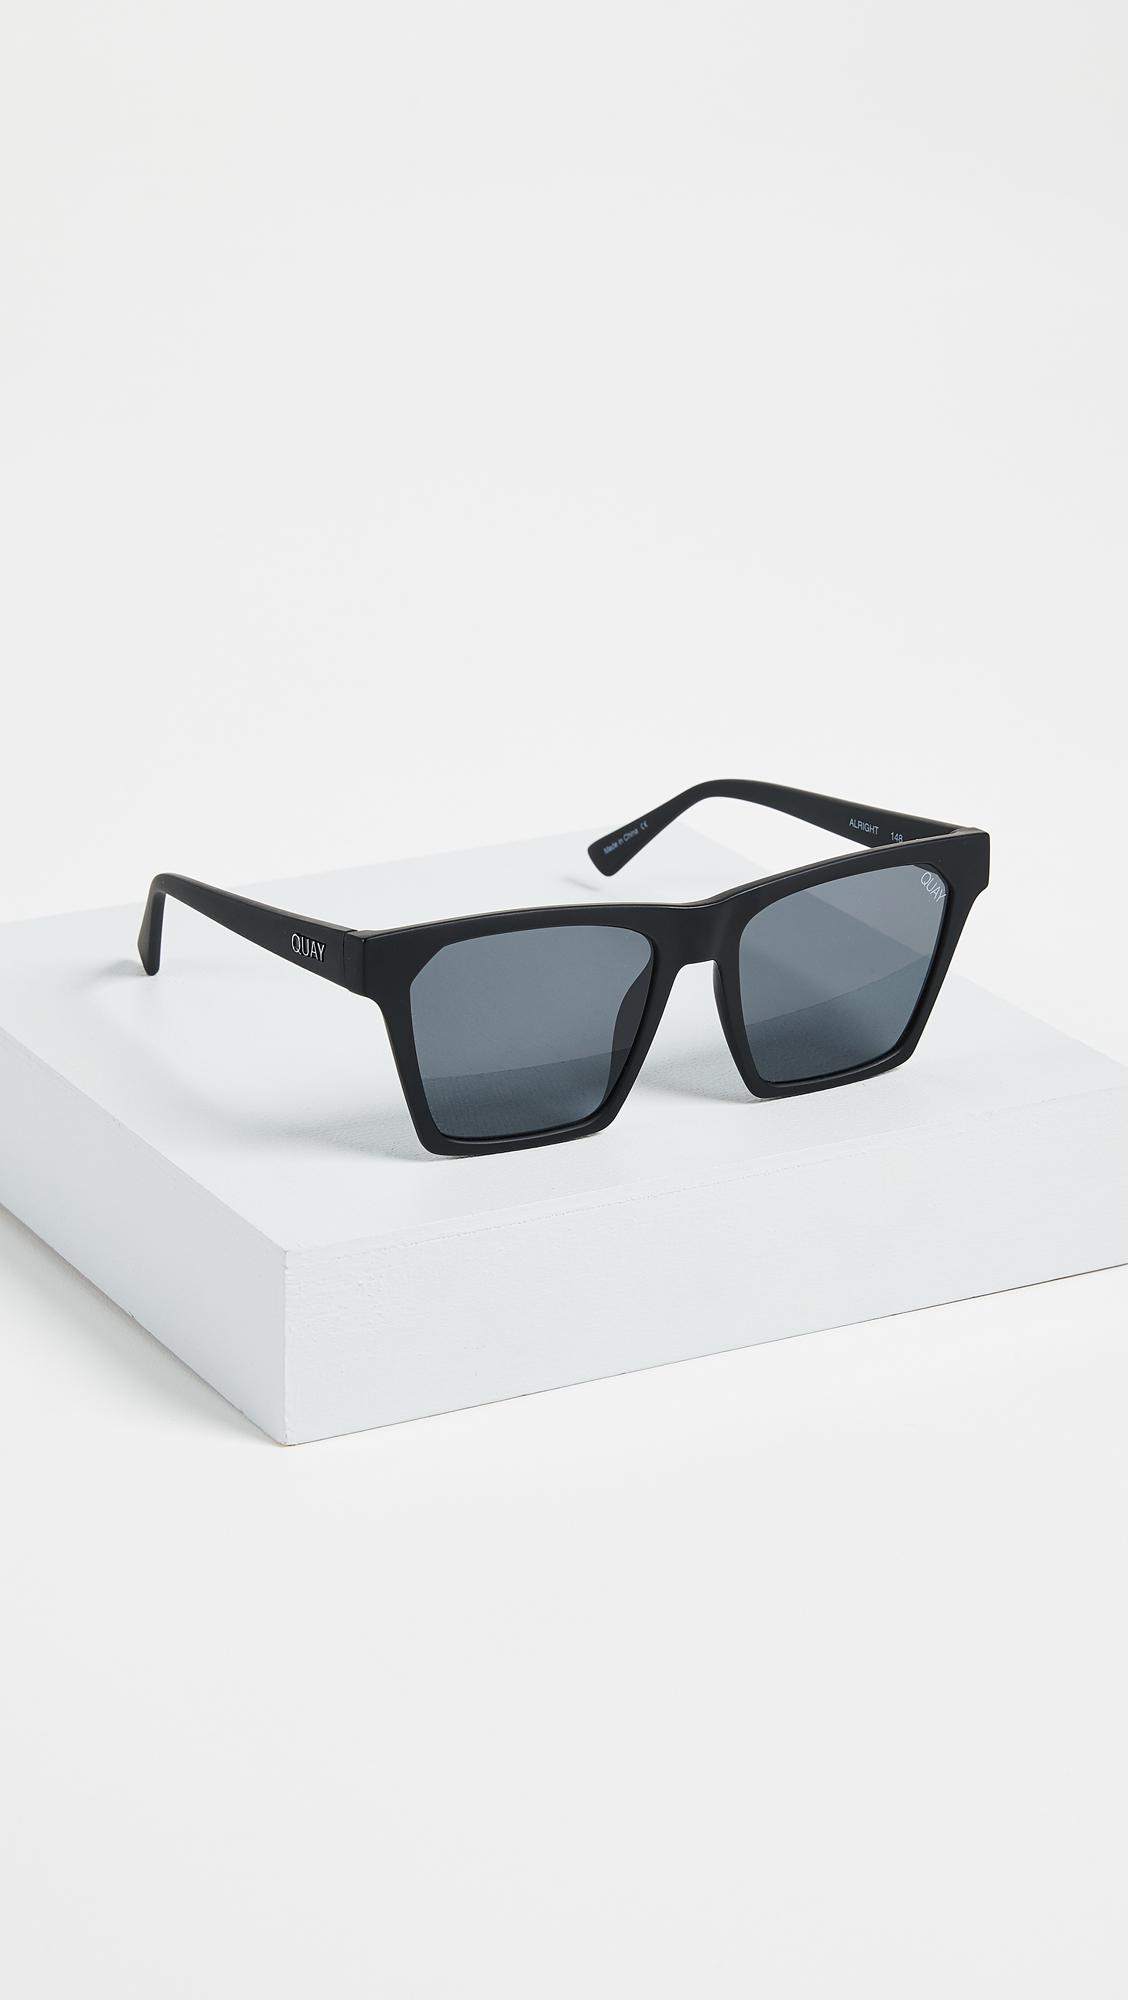 Quay Alright Sunglasses in Black/Smoke (Black) | Lyst